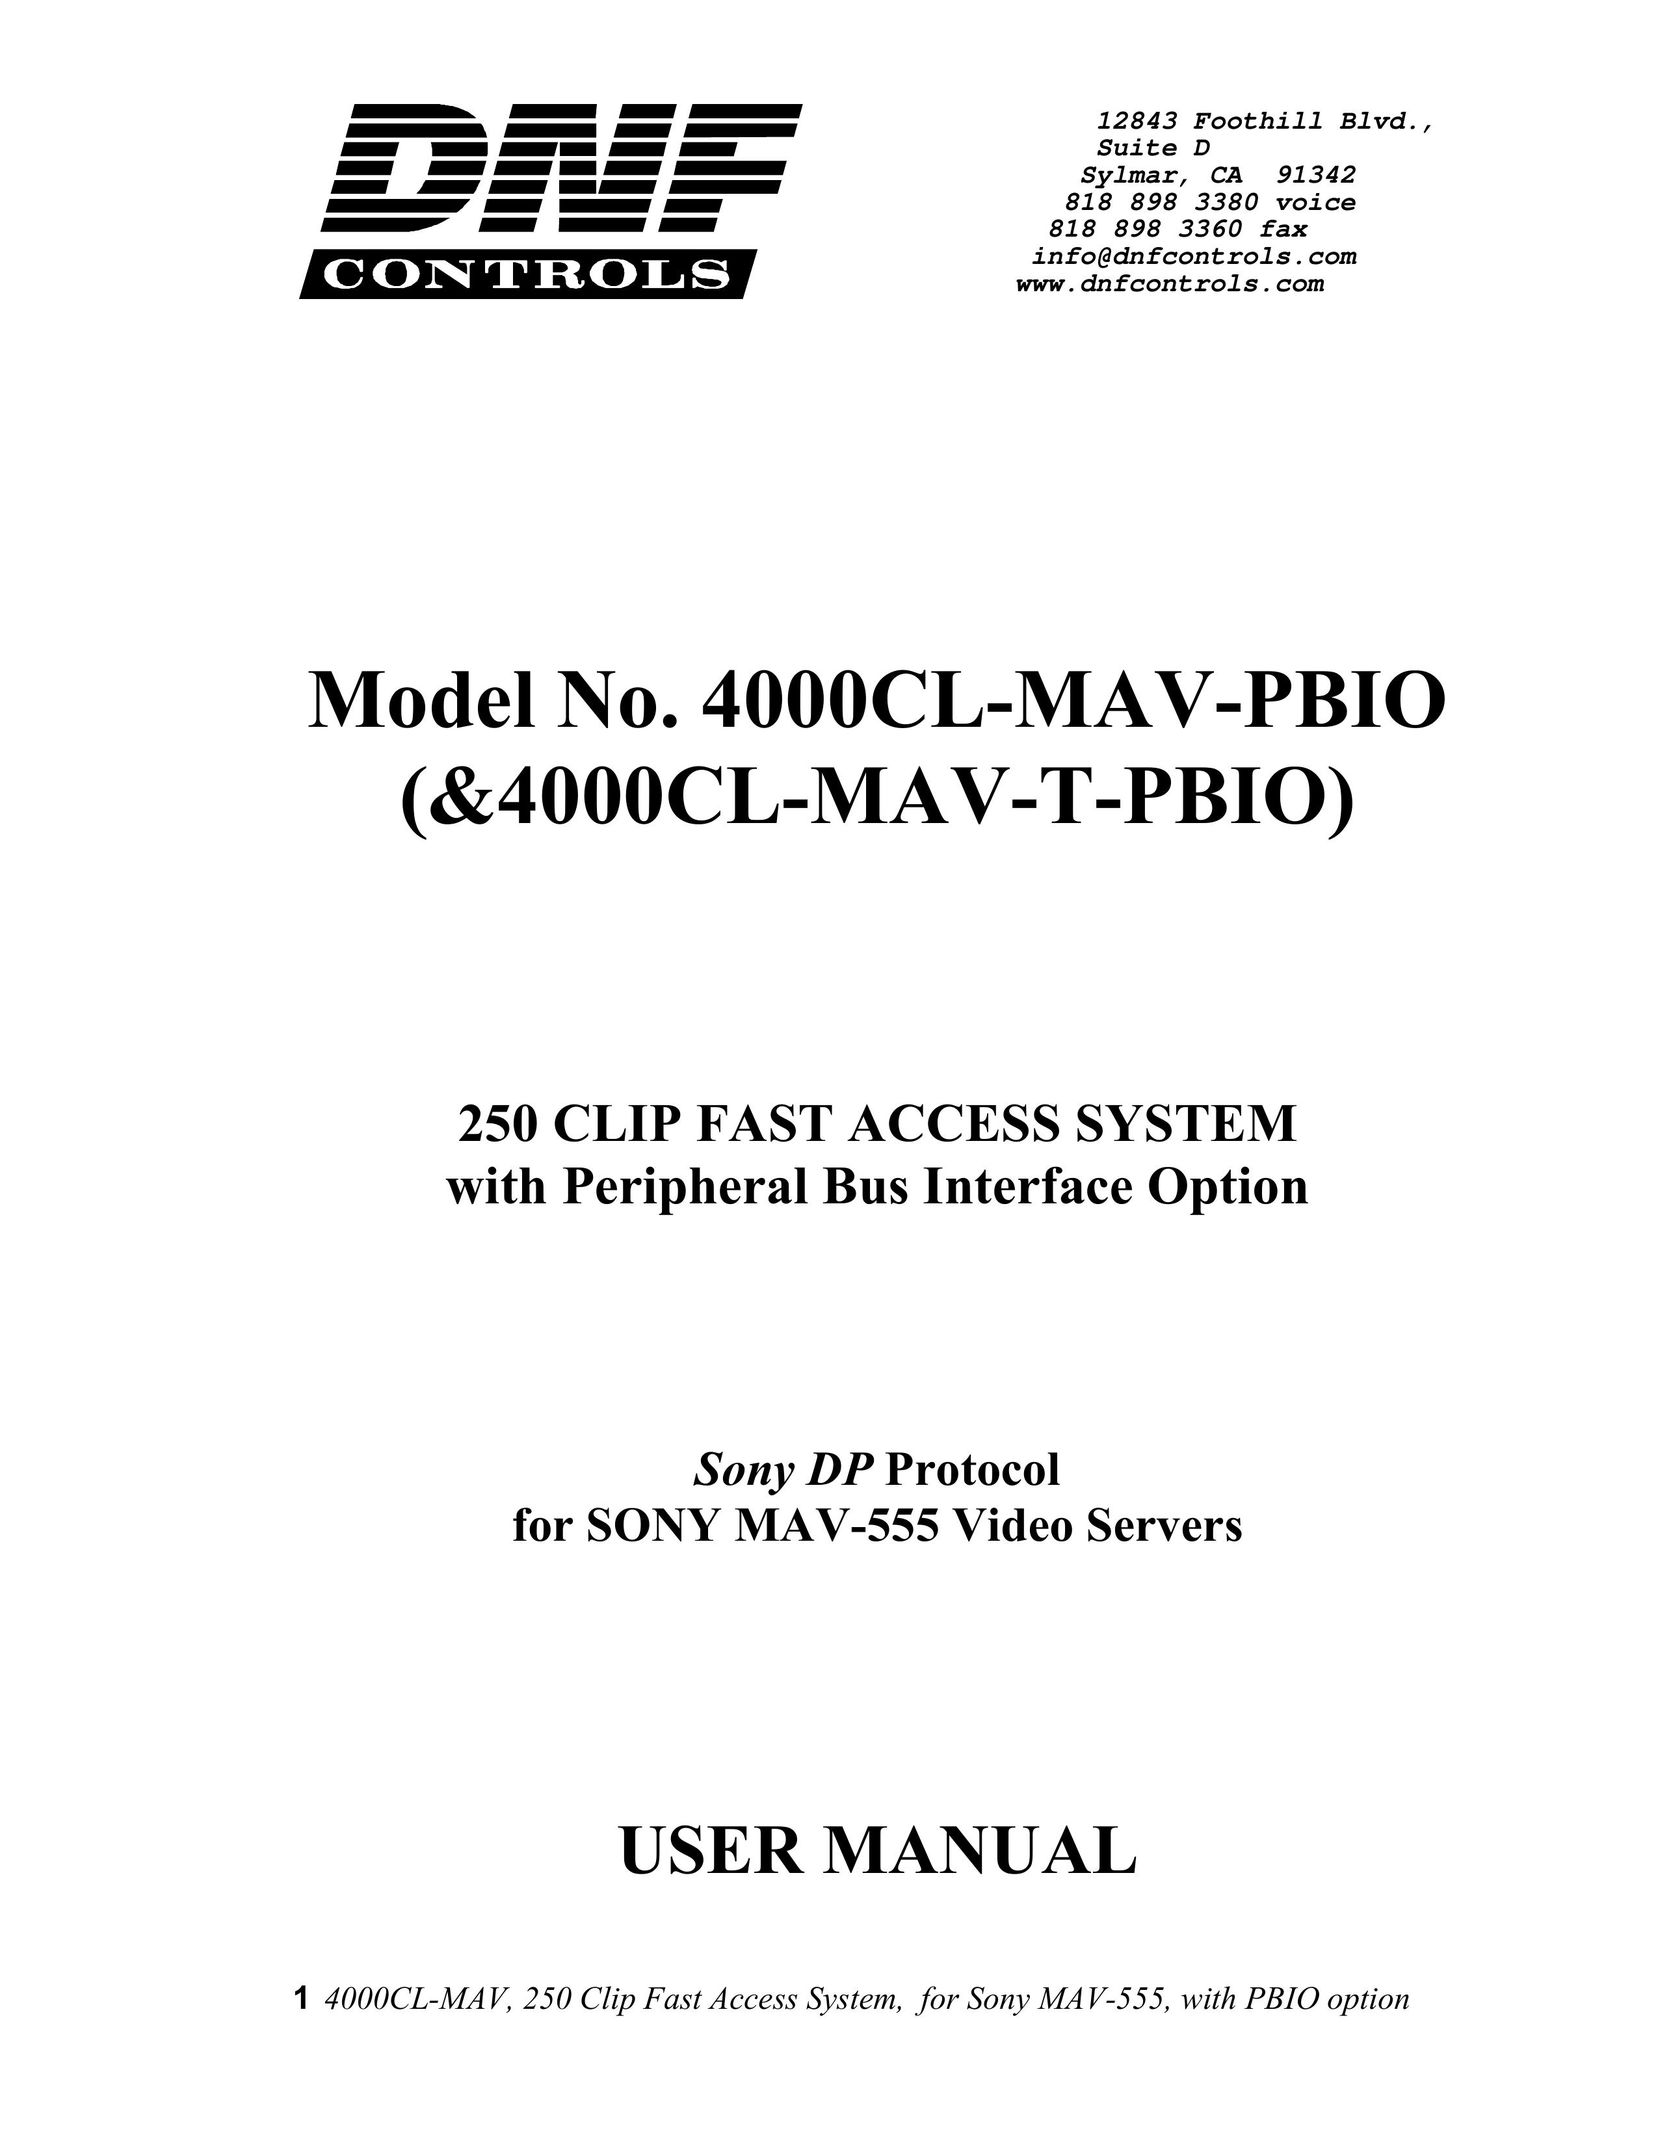 Sony 4000CL-MAV-PBIO Network Card User Manual